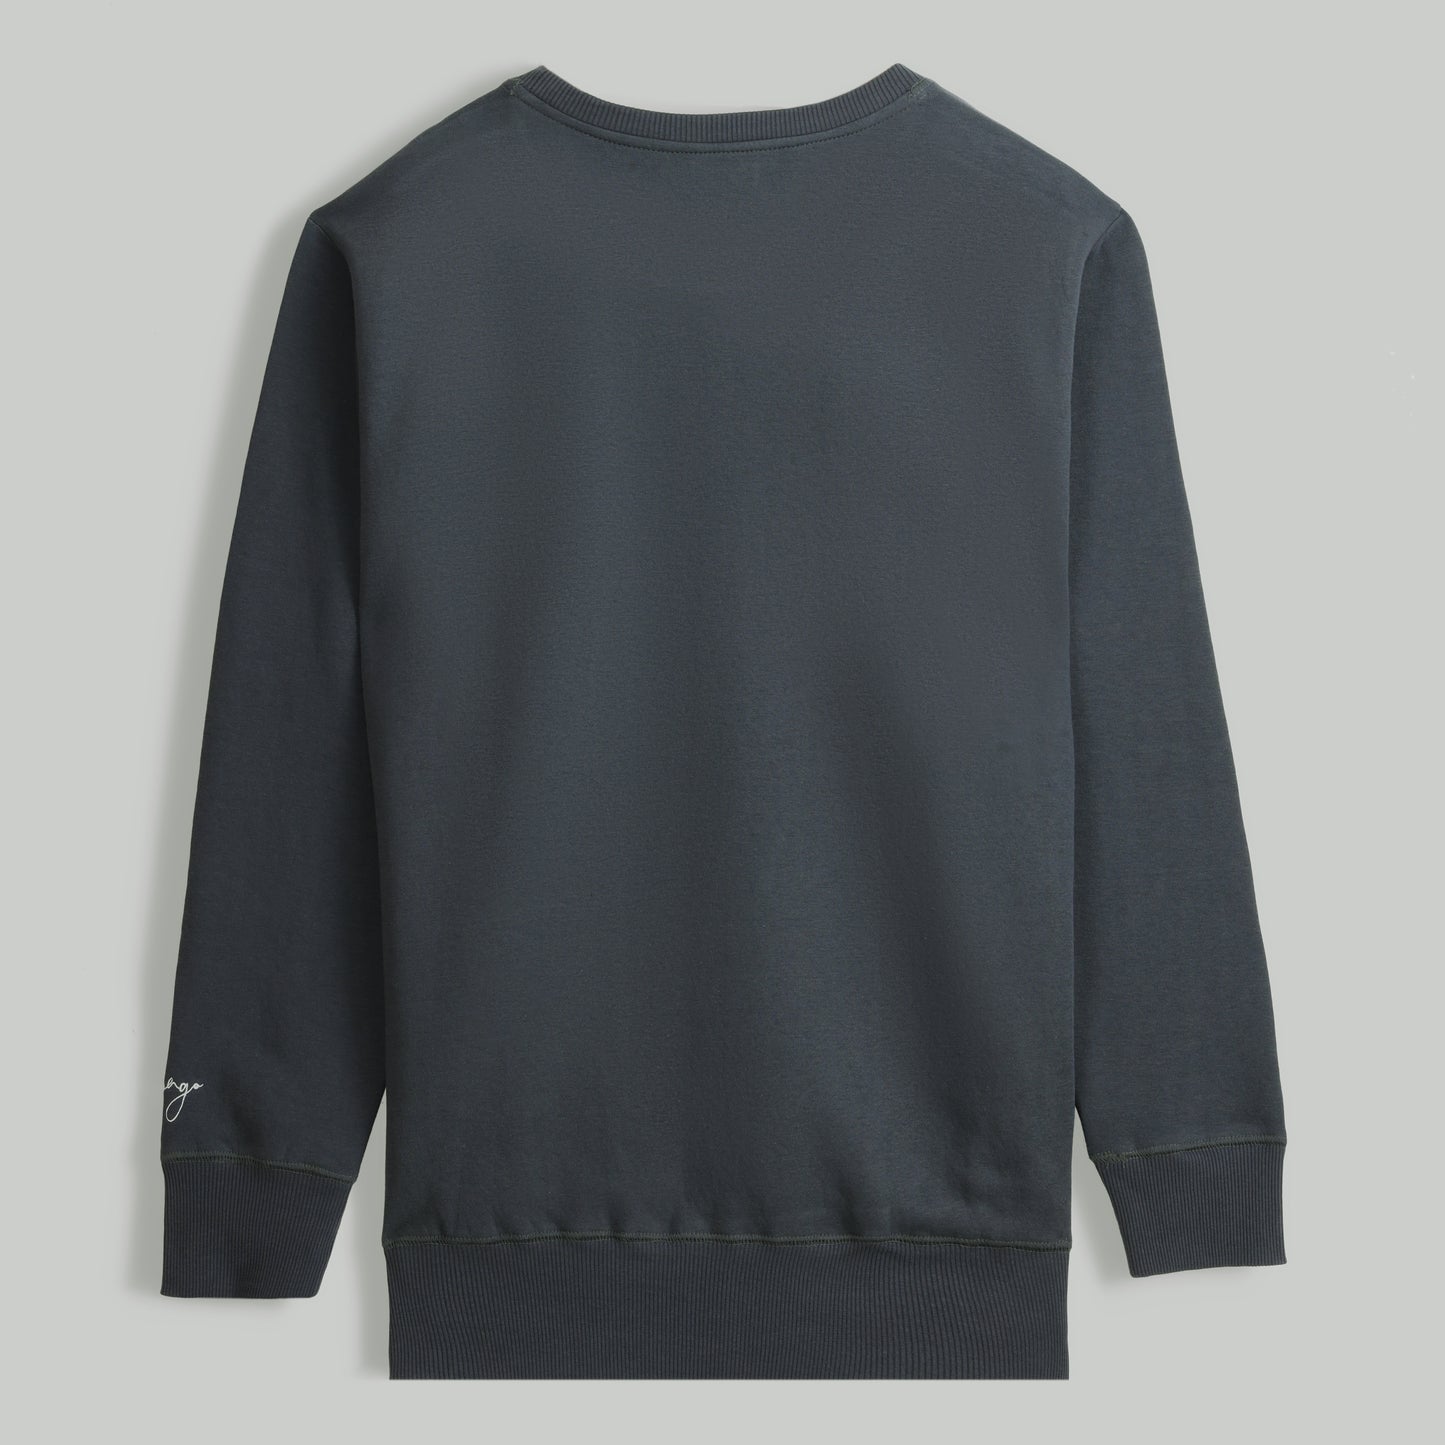 Polarbear Sweatshirt - Charcoal